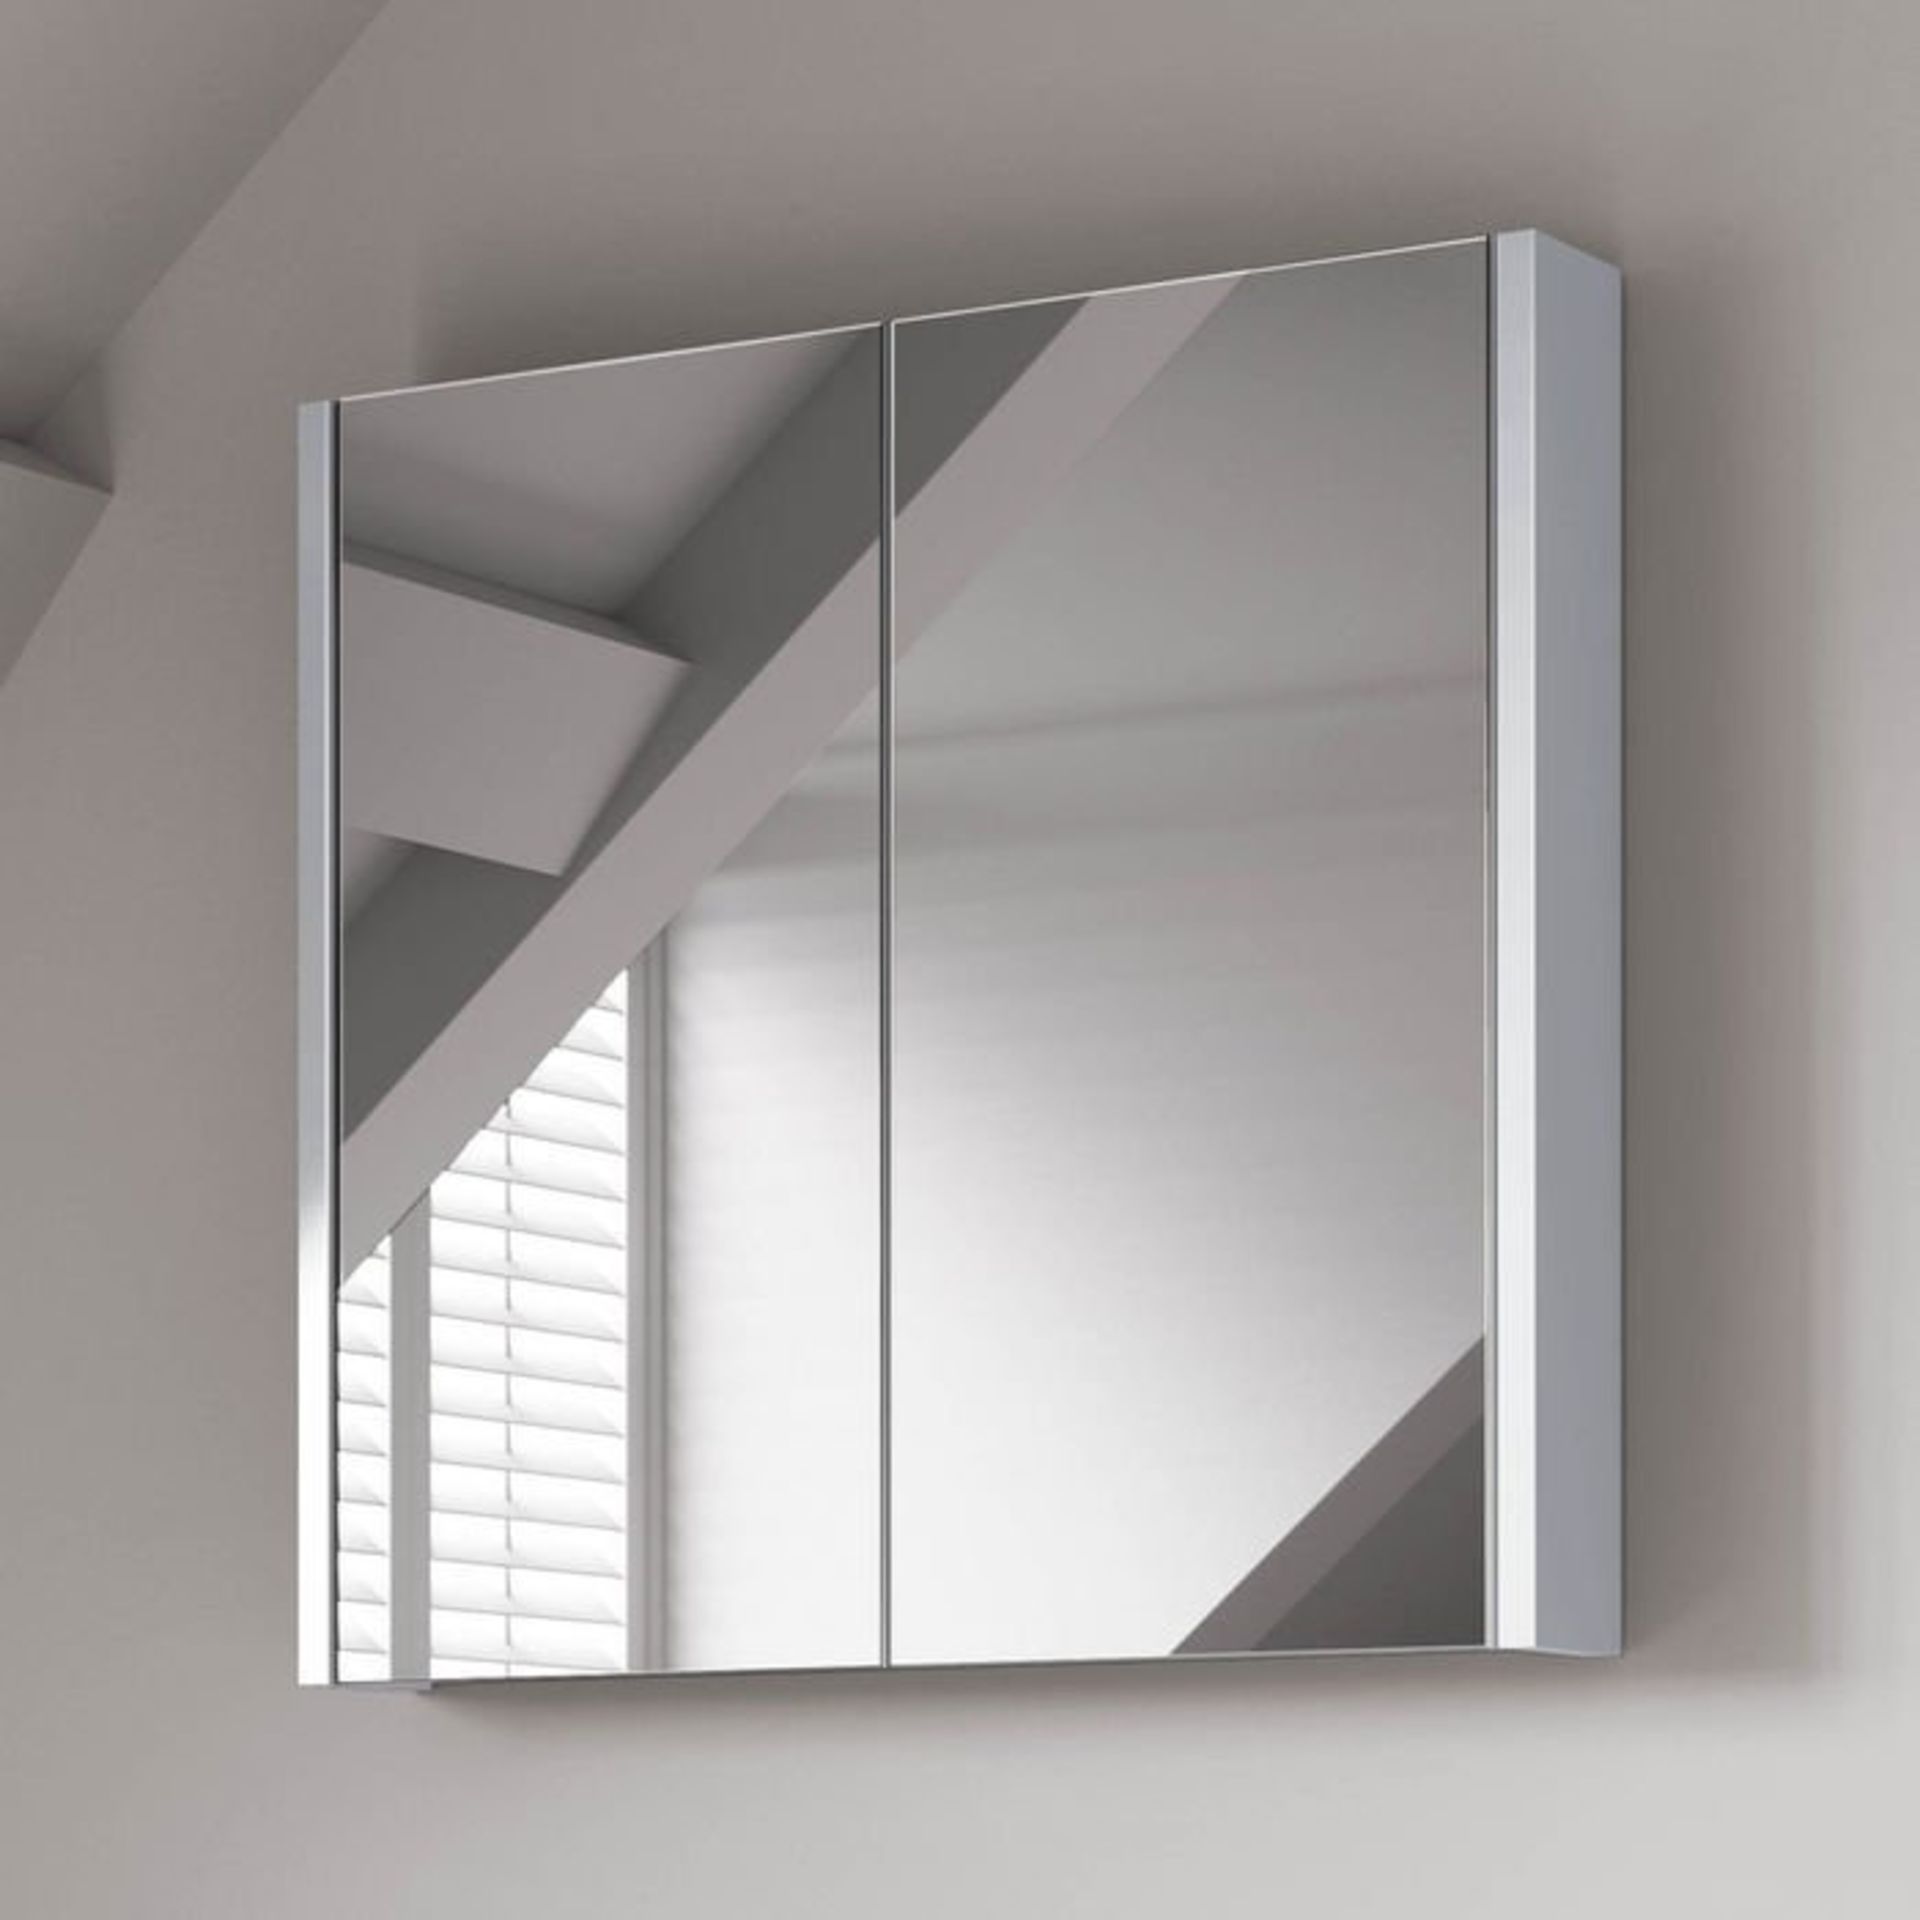 (J233) 600mm Gloss White Double Door Mirror Cabinet. RRP £199.99. Sleek contemporary design Double